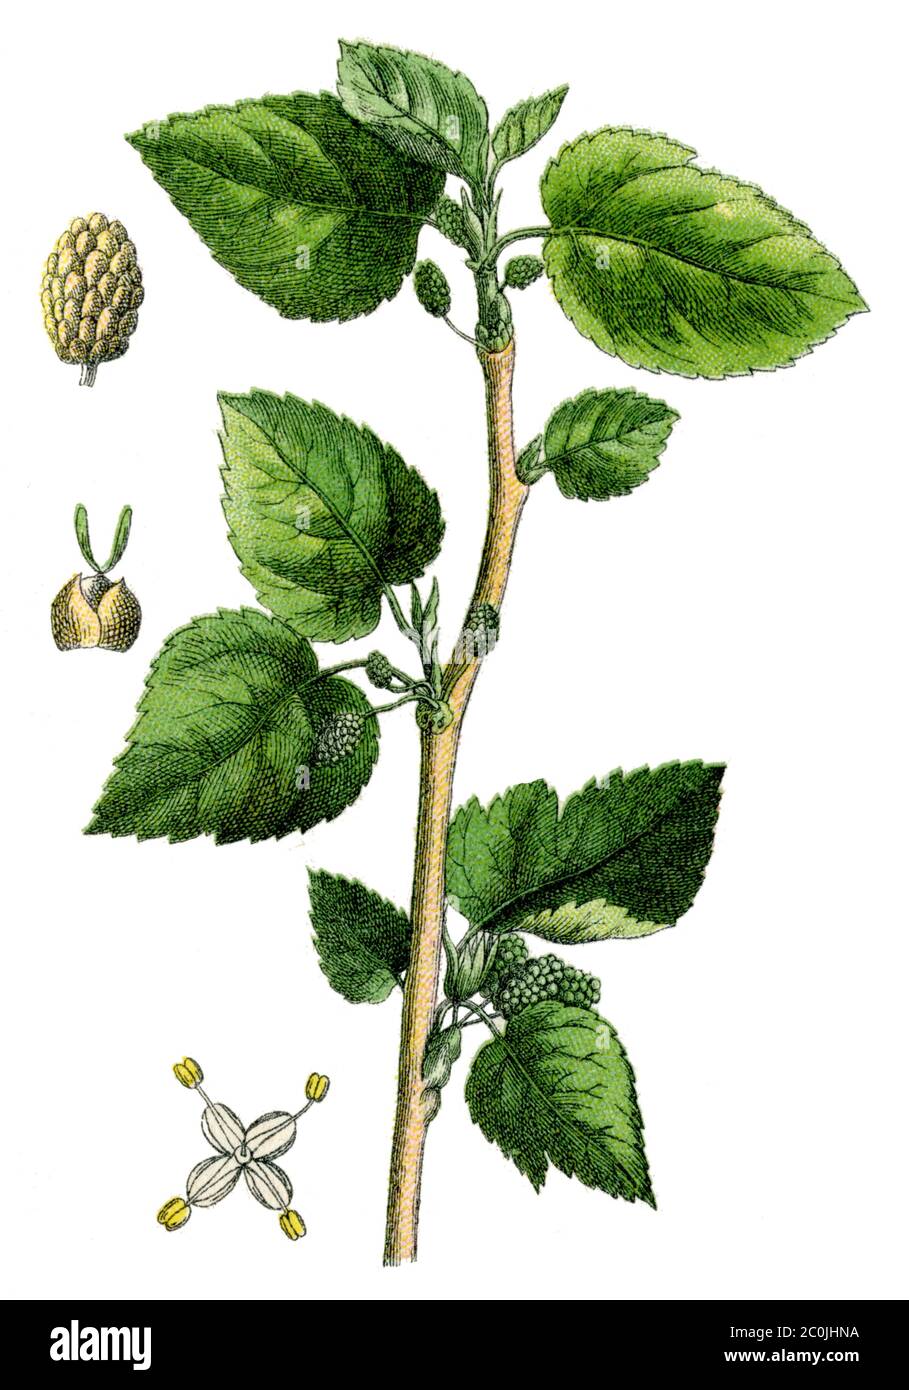 White Mulberry / Morus alba / Weiße Maulbeere (botany book, 1900) Stock Photo